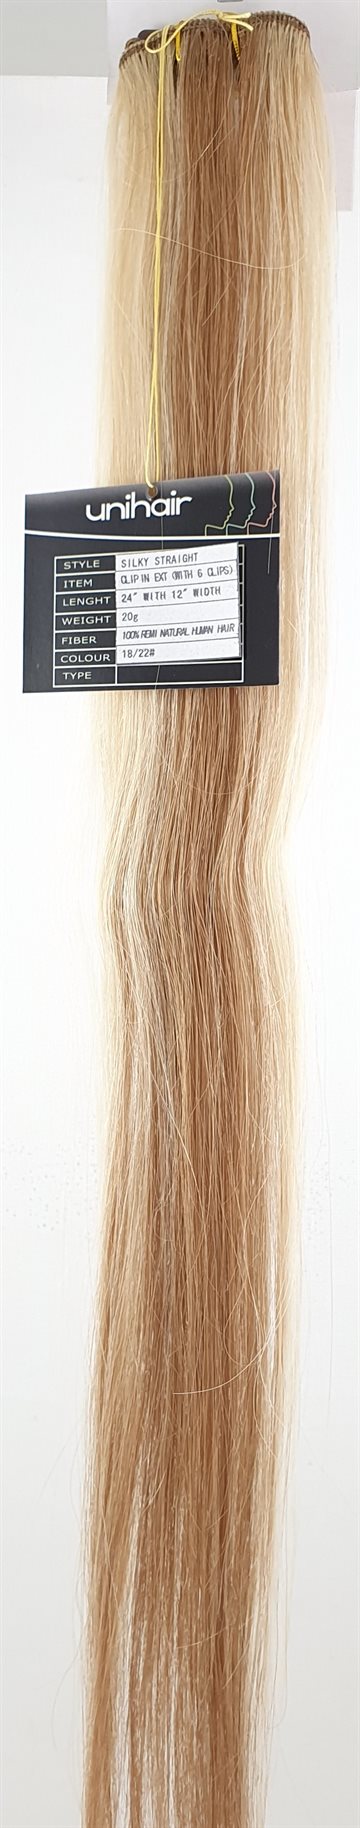 Human Hair - Silky stright 6 Pcs Clips in. 24" (60cm Længde) Farve 18/22.